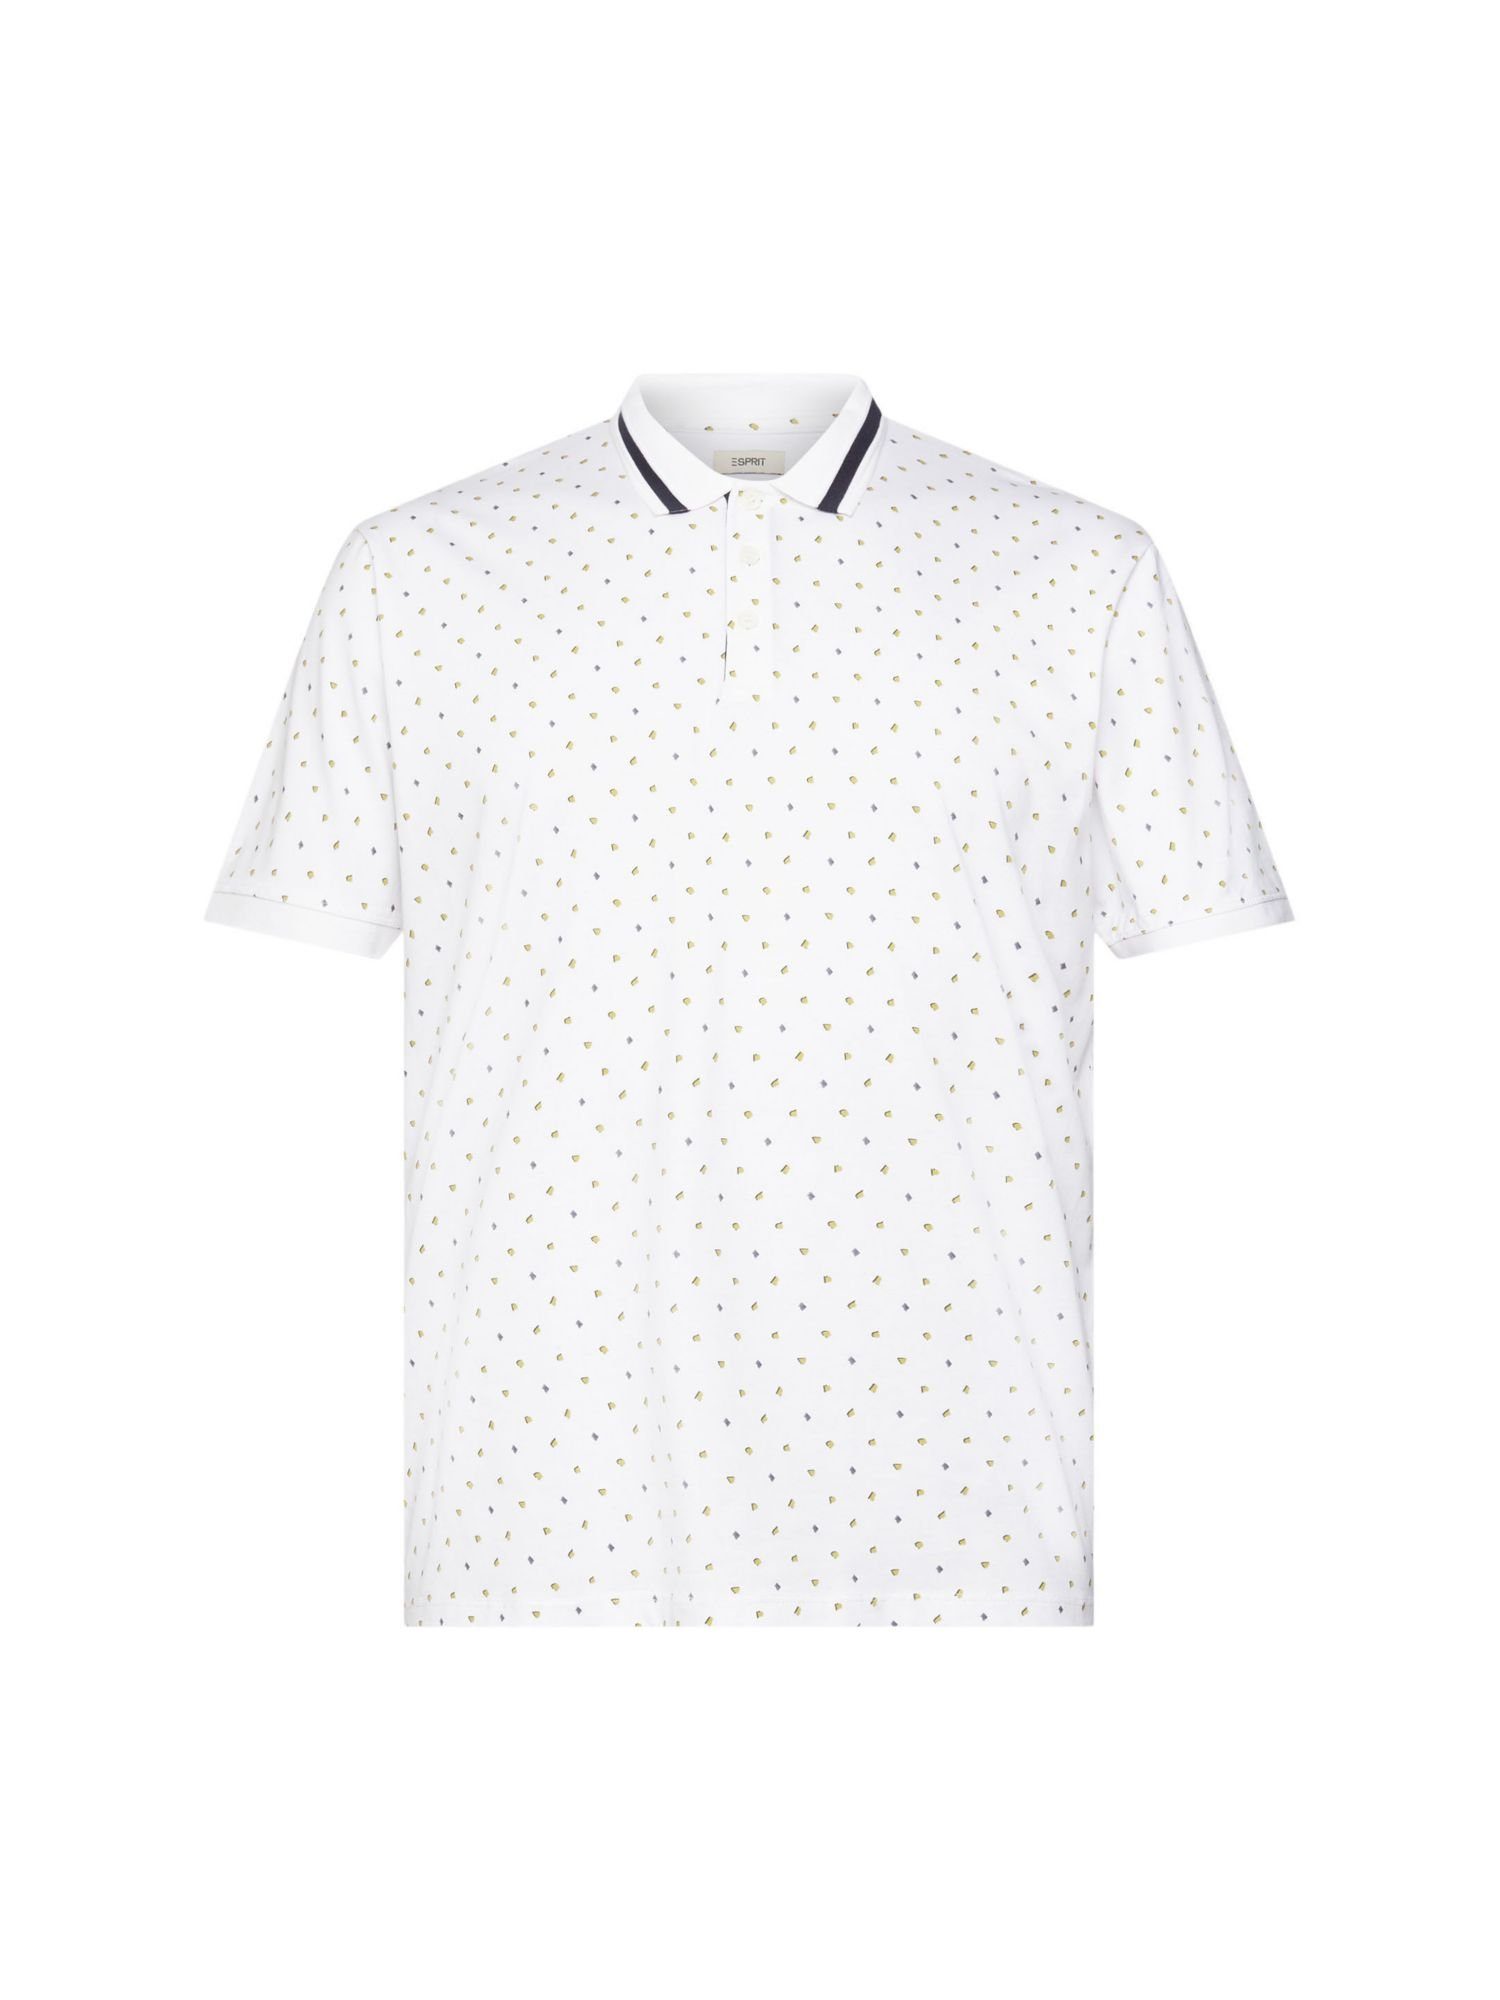 Esprit Poloshirt Poloshirt mit Allover-Muster OFF WHITE | Poloshirts